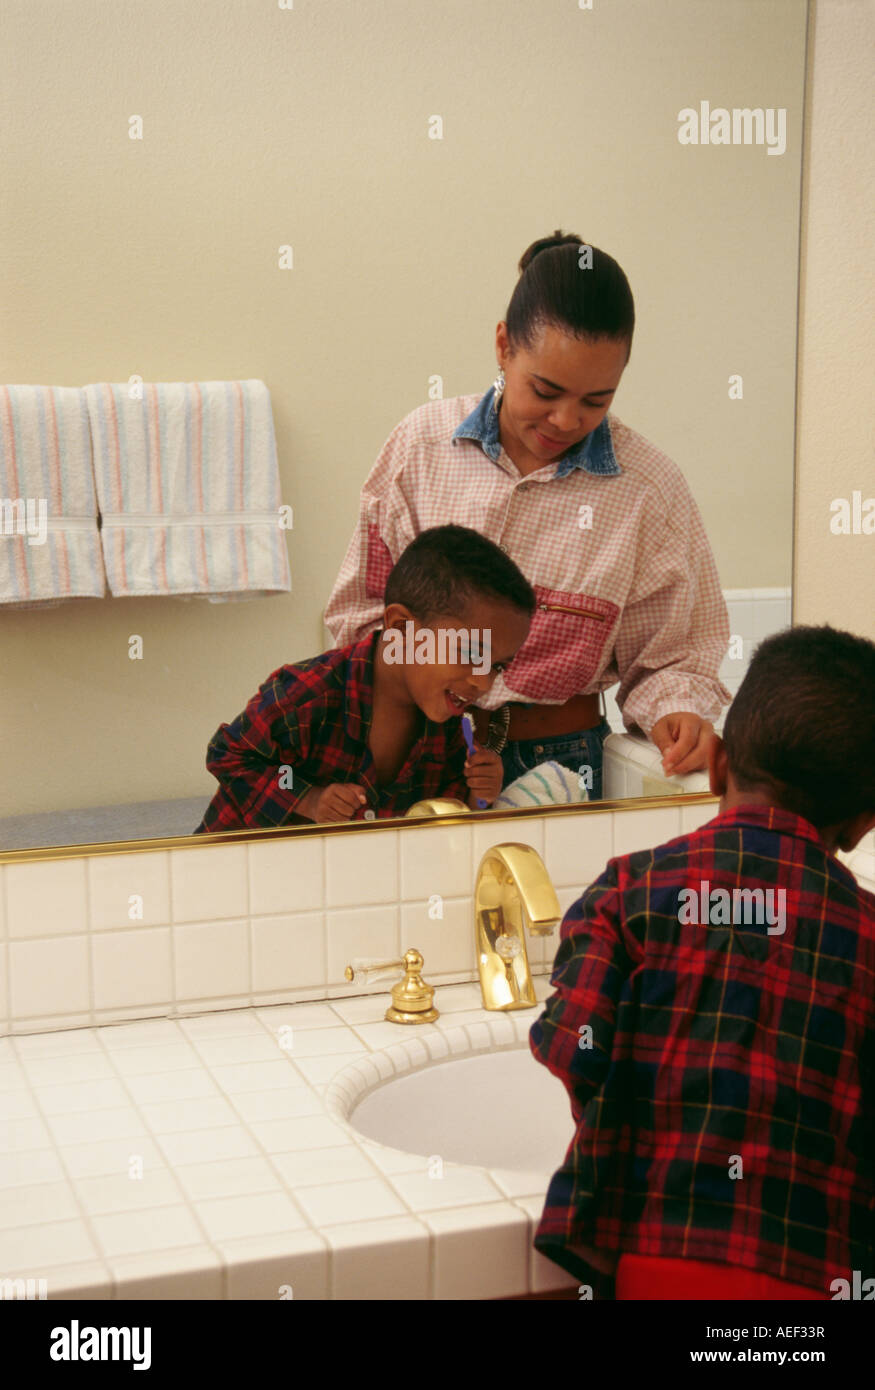 Boy 5-6 year old  brushing teeth holding toothbrush smiling rear view Stock Photo